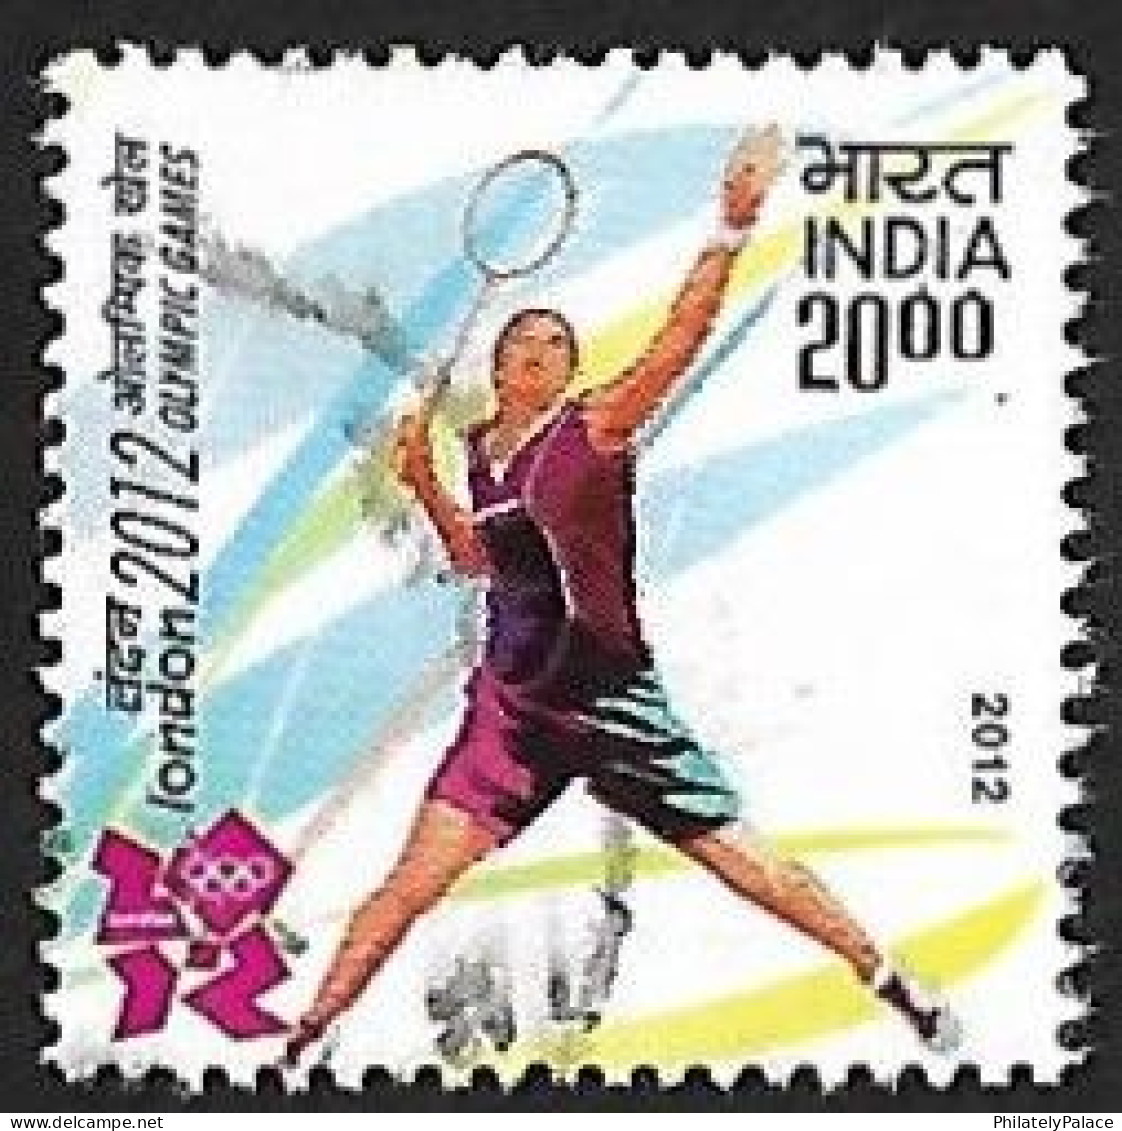 India 2012 LONDON OLYMPICS, Olympic, Badminton, Racket, Sports, Sport, Used (**) Inde Indien - Gebruikt